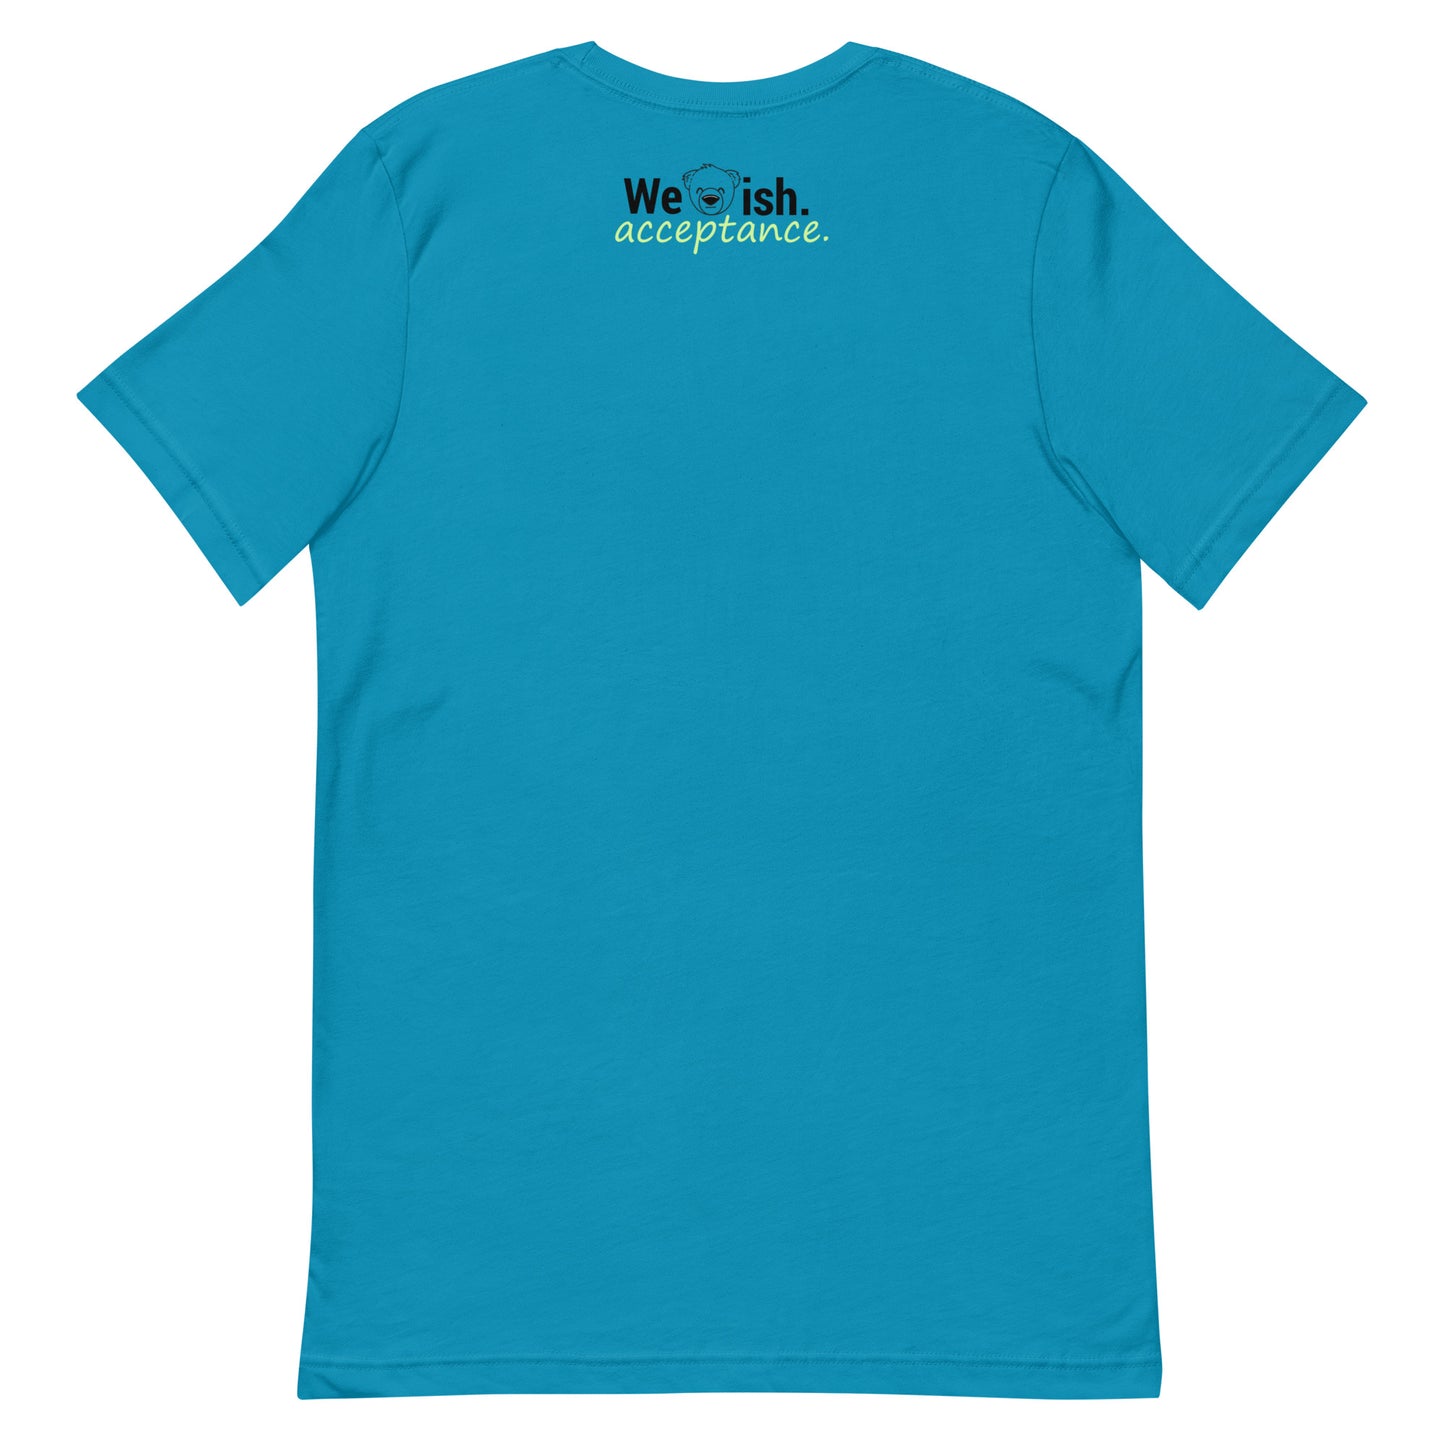 WeBearish Autism Acceptance Shirt (Aqua Blue)